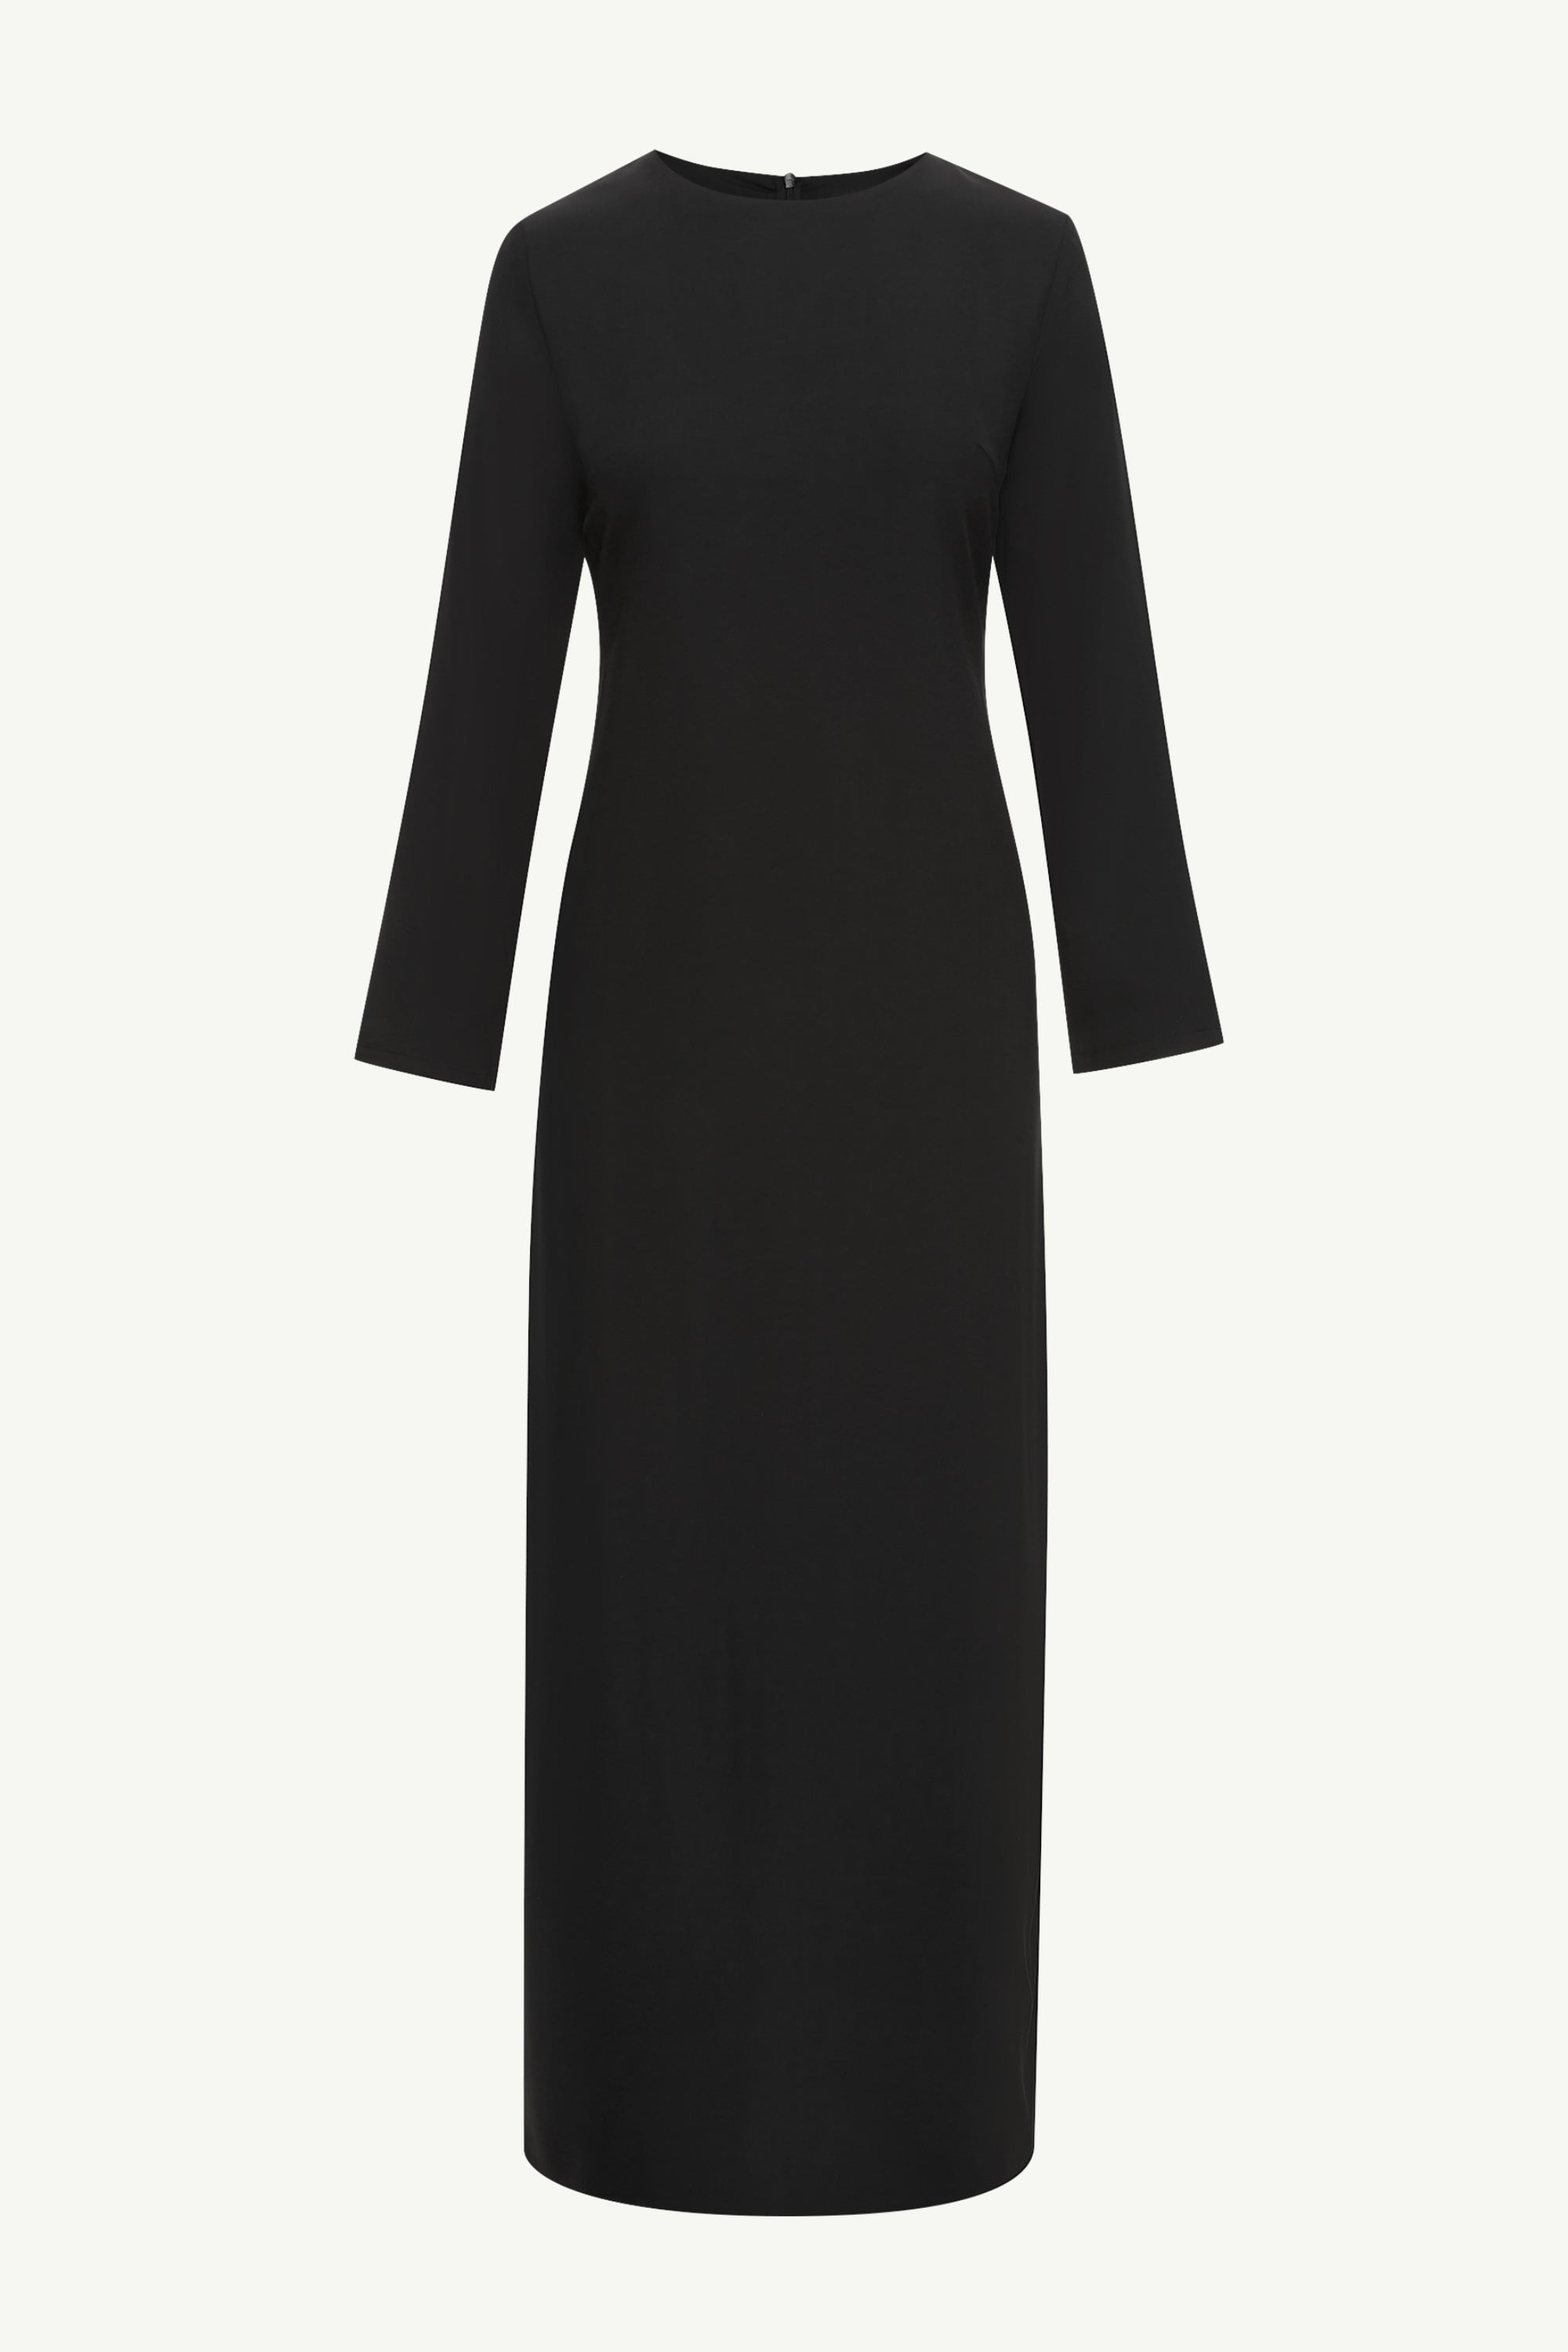 Essential Basic Maxi Dress - Black Clothing Veiled 